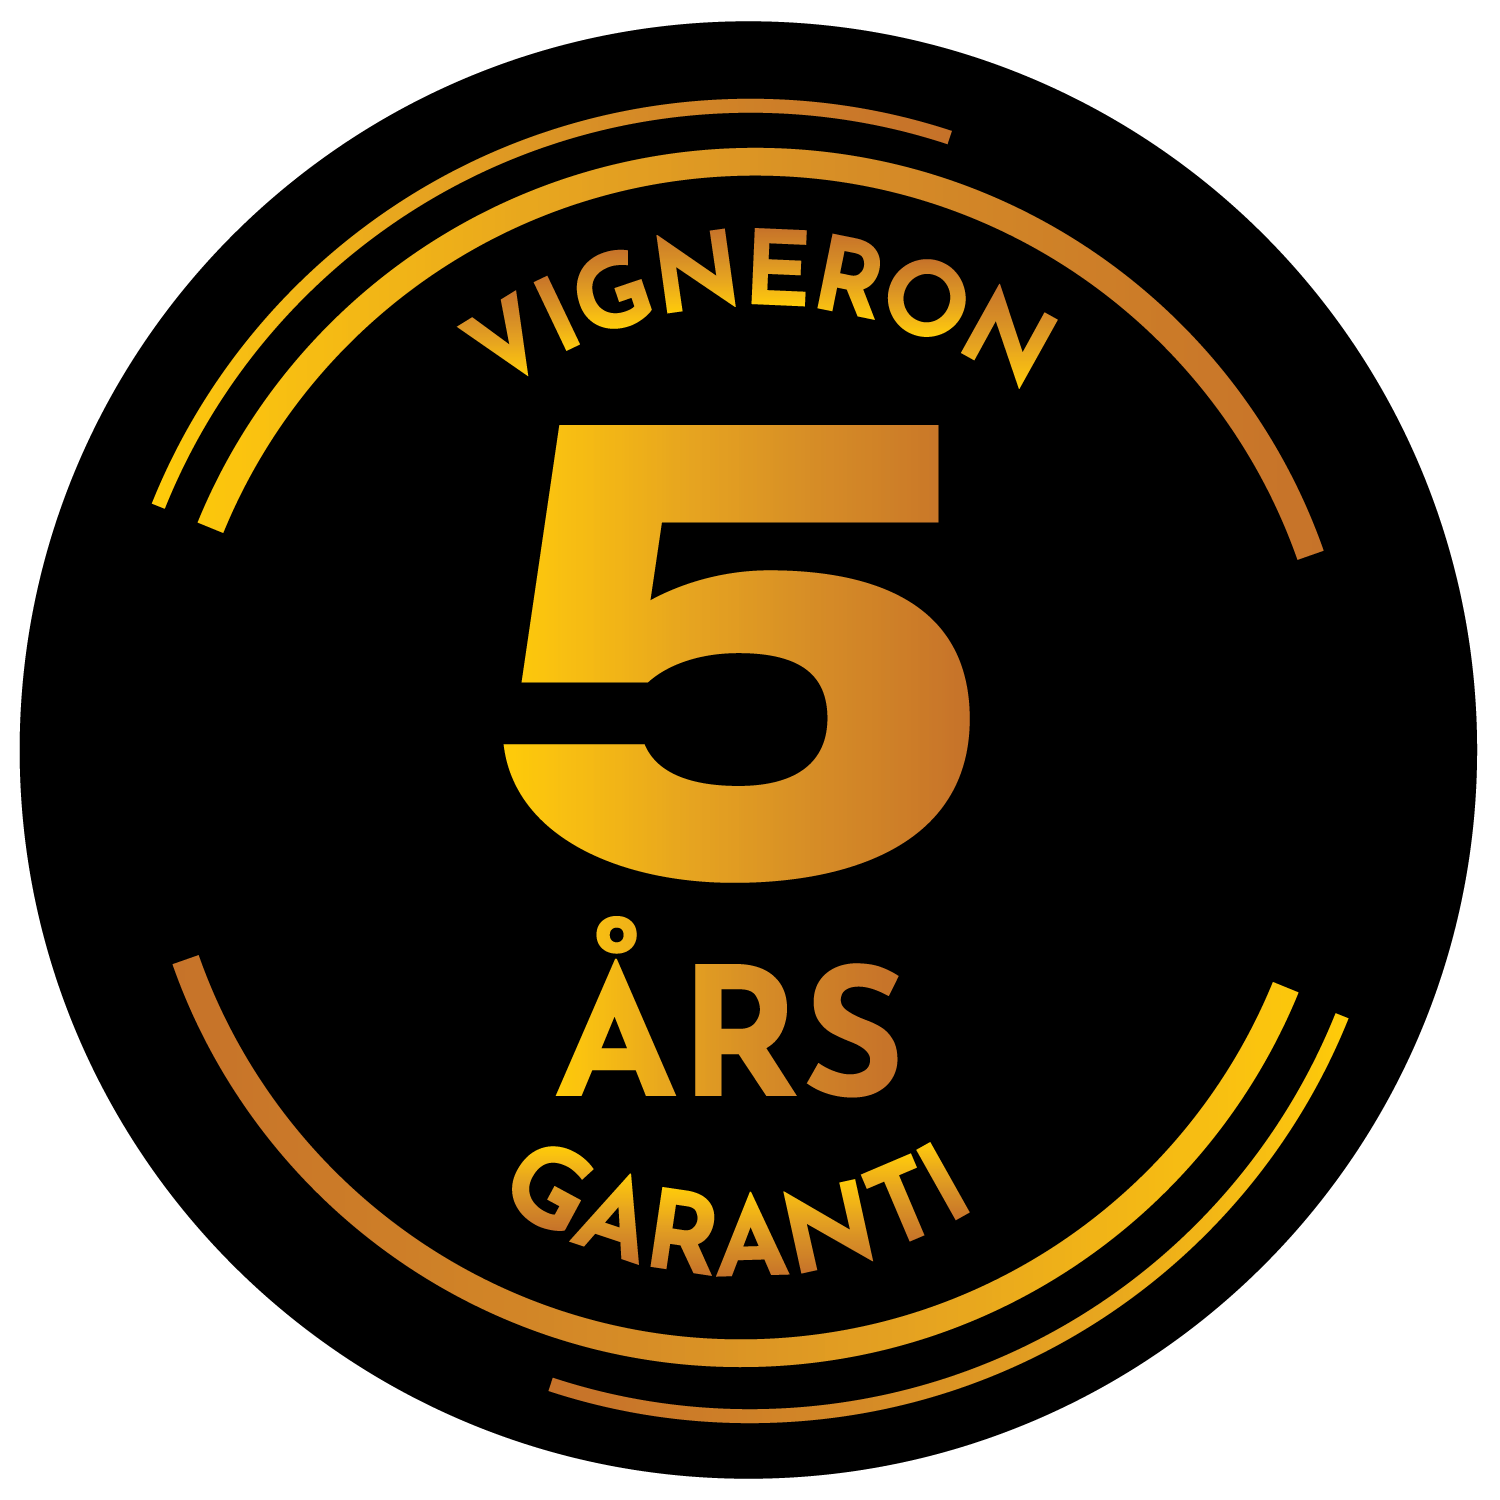 Vigneron Storage 170 SB, Black edition